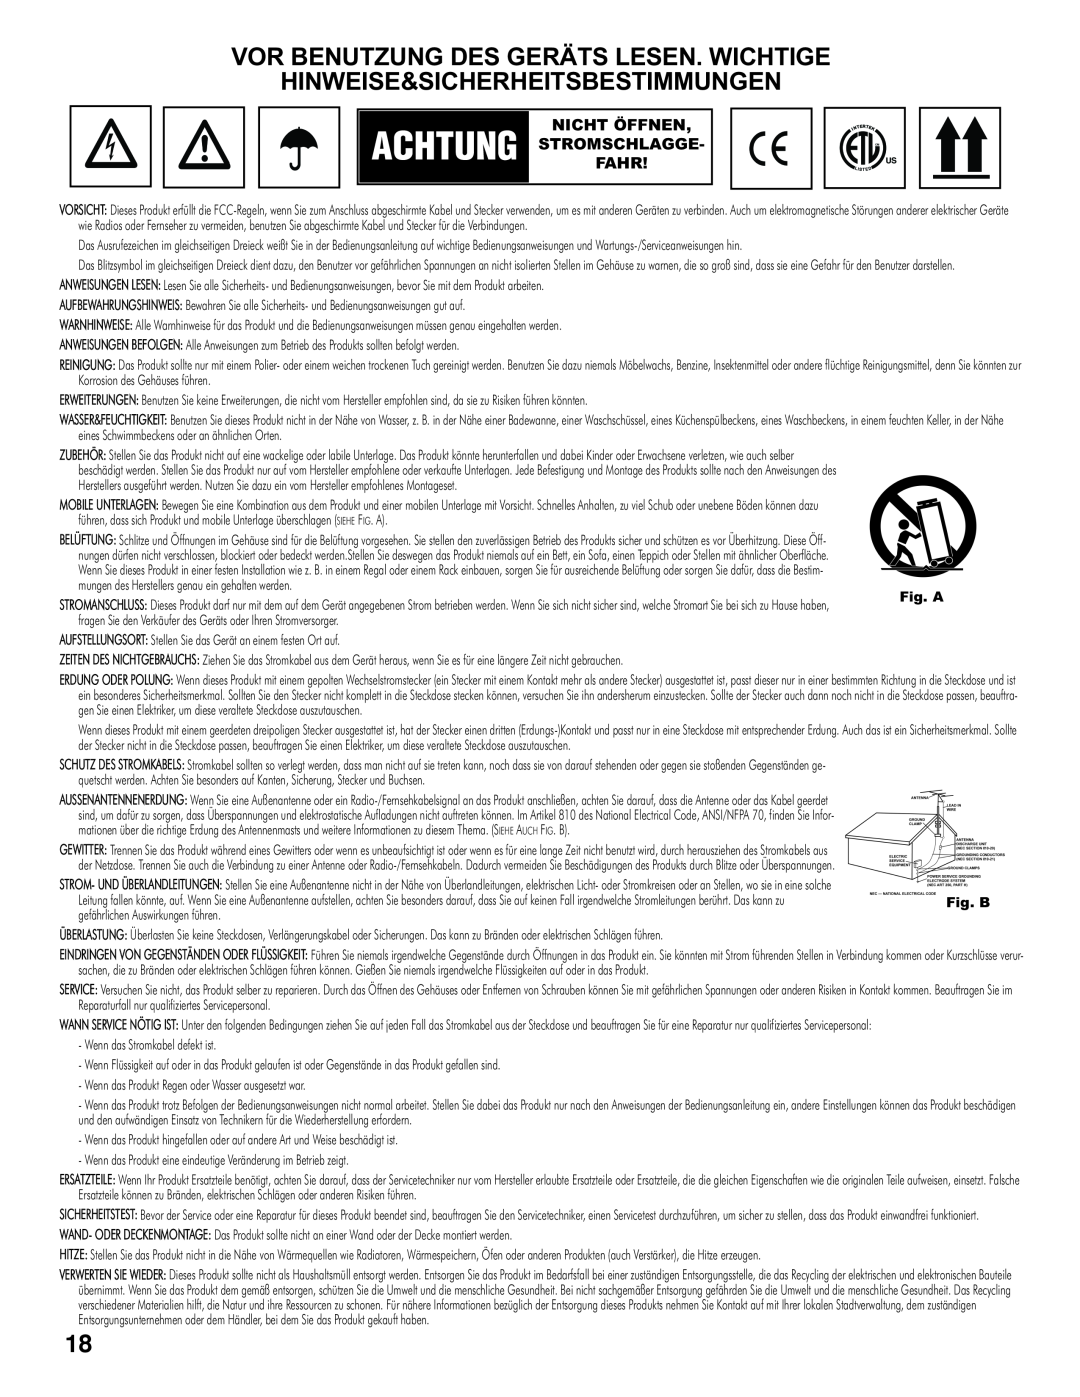 Gemini CDM-3200 manual Achtung, Nicht Öffnen, Stromschlagge, Fahr, Fig. B 